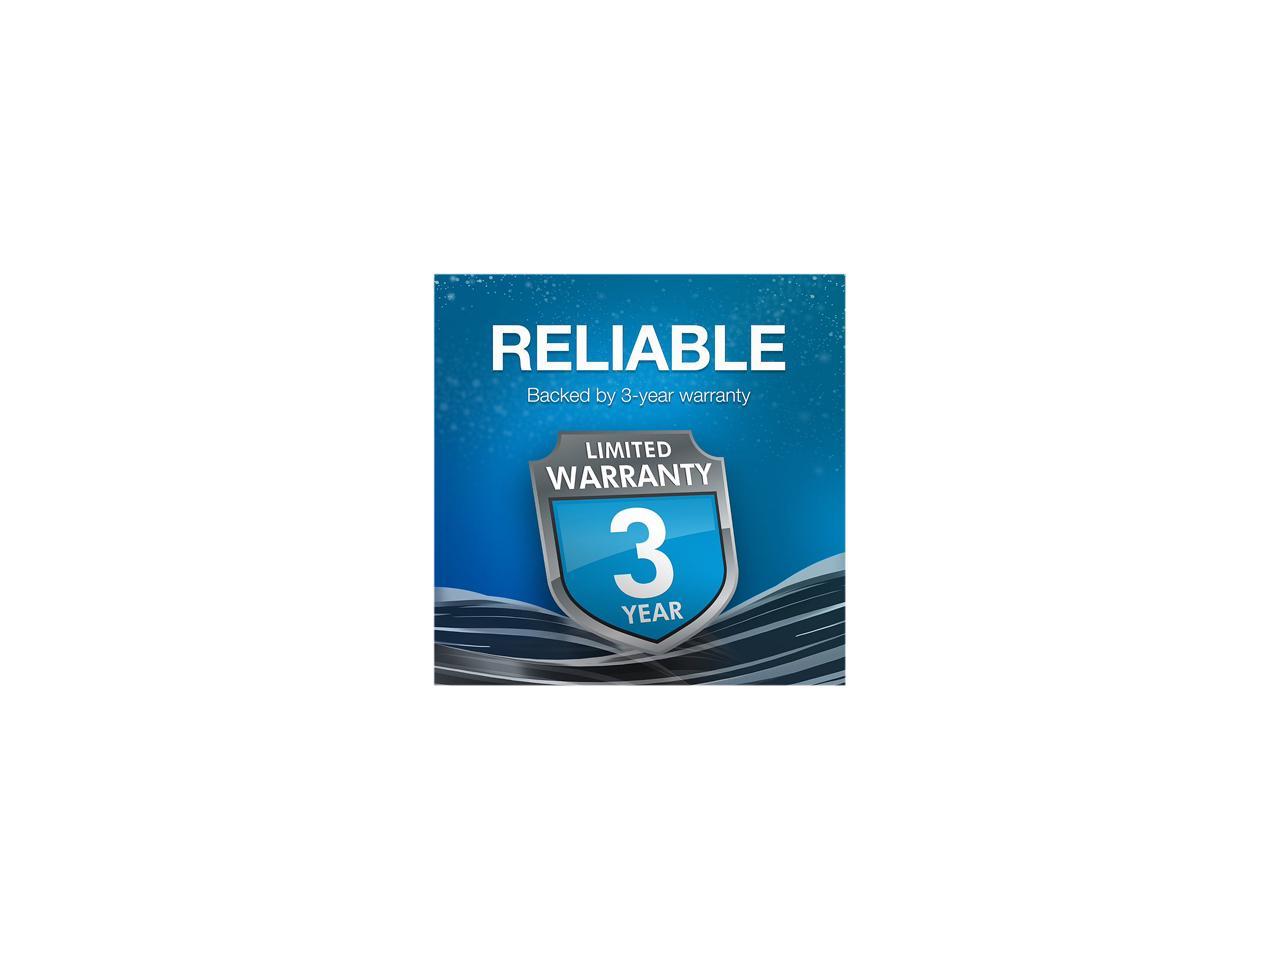 Seagate SkyHawk 4TB Surveillance Hard Drive 256MB Cache SATA 6.0Gb/s NVR DVR 3.5" Internal HDD ST4000VX013